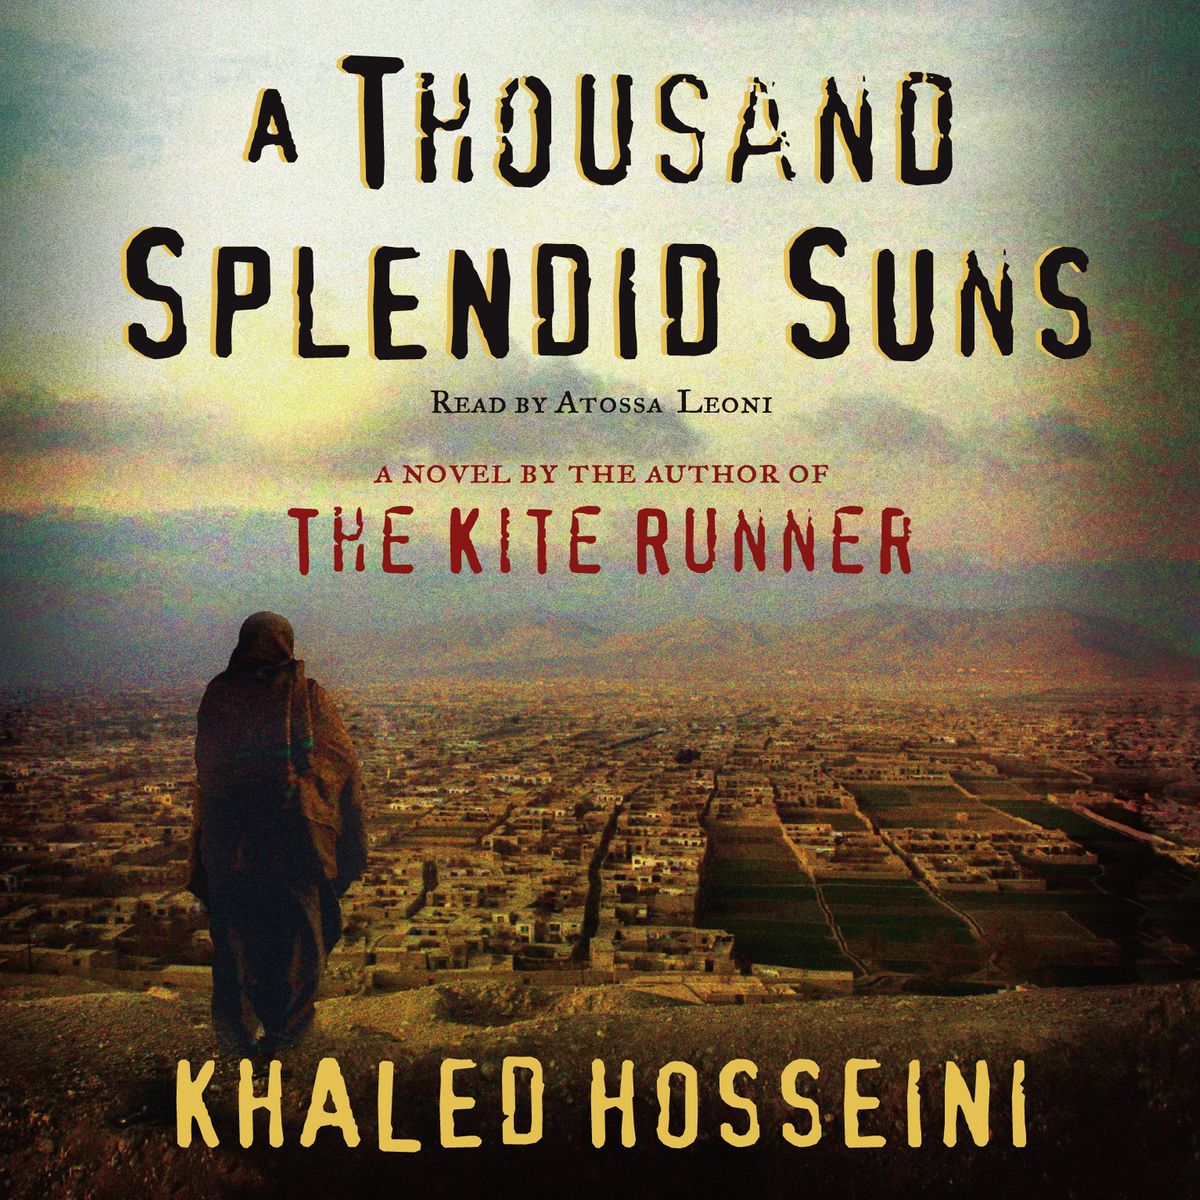 A Thousand Splendid Suns: Book Review Khalid Hosseini